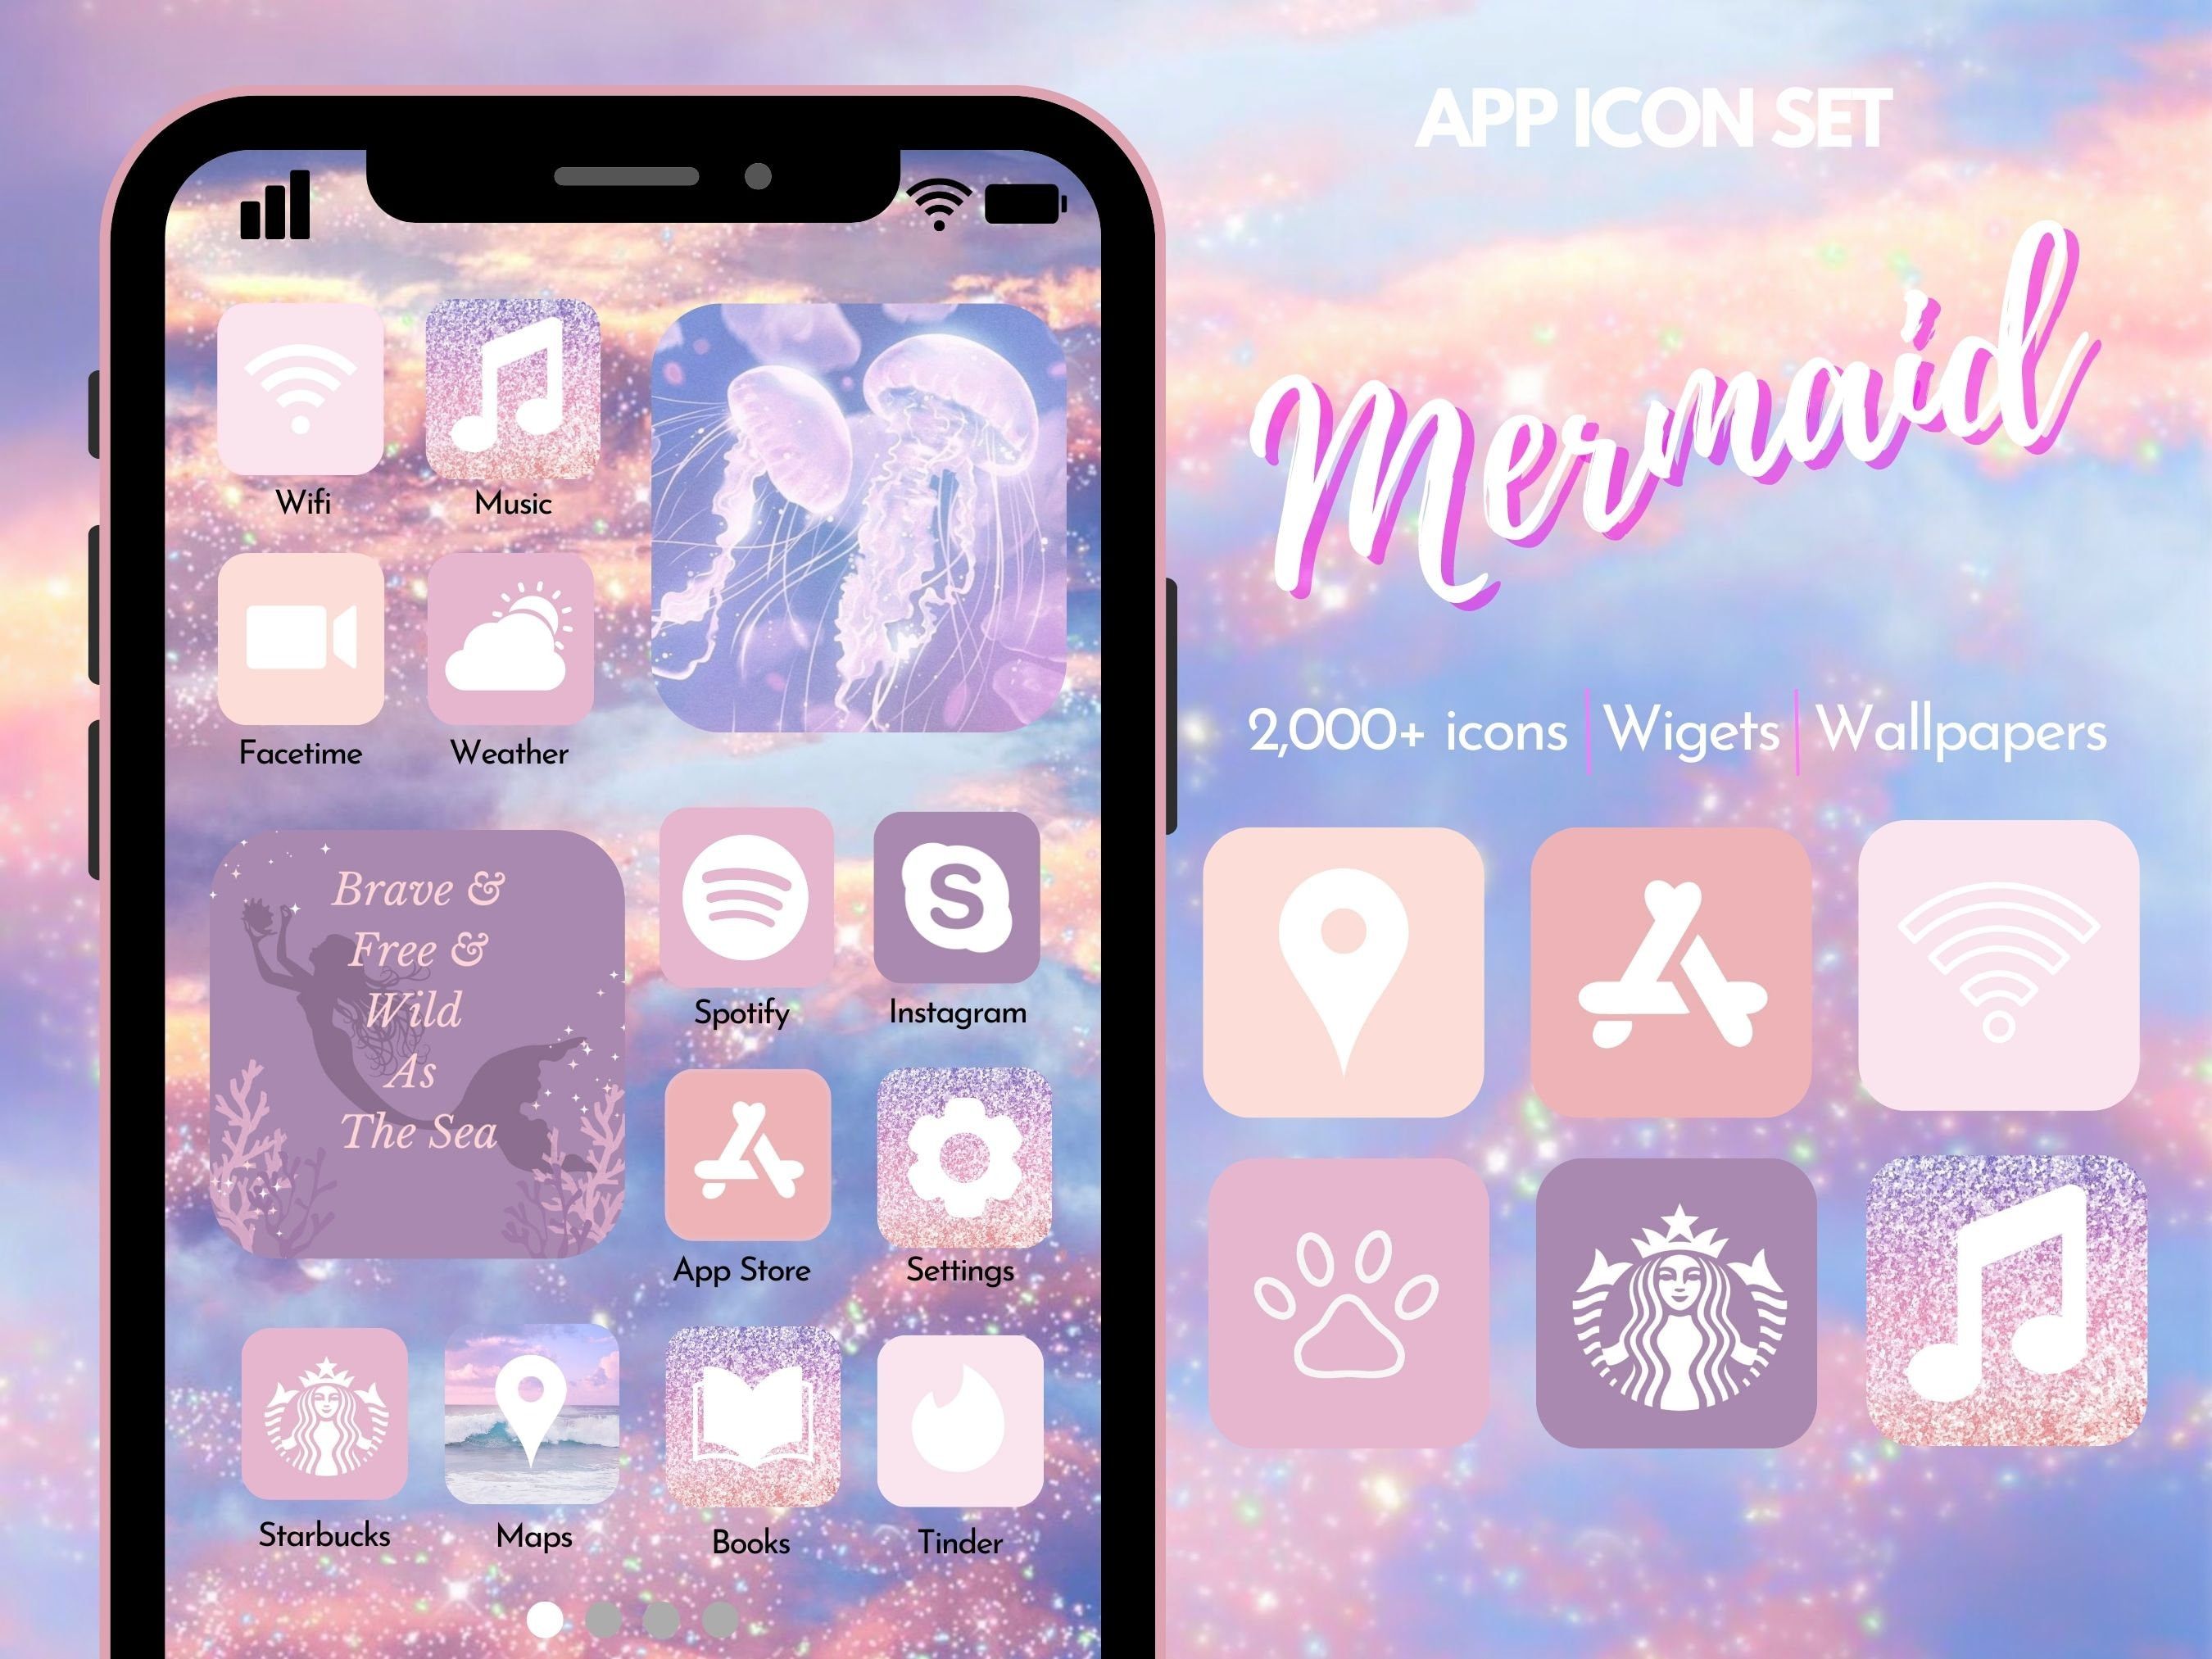 App Icon Set mermaid Aesthetic 2000 Icon With